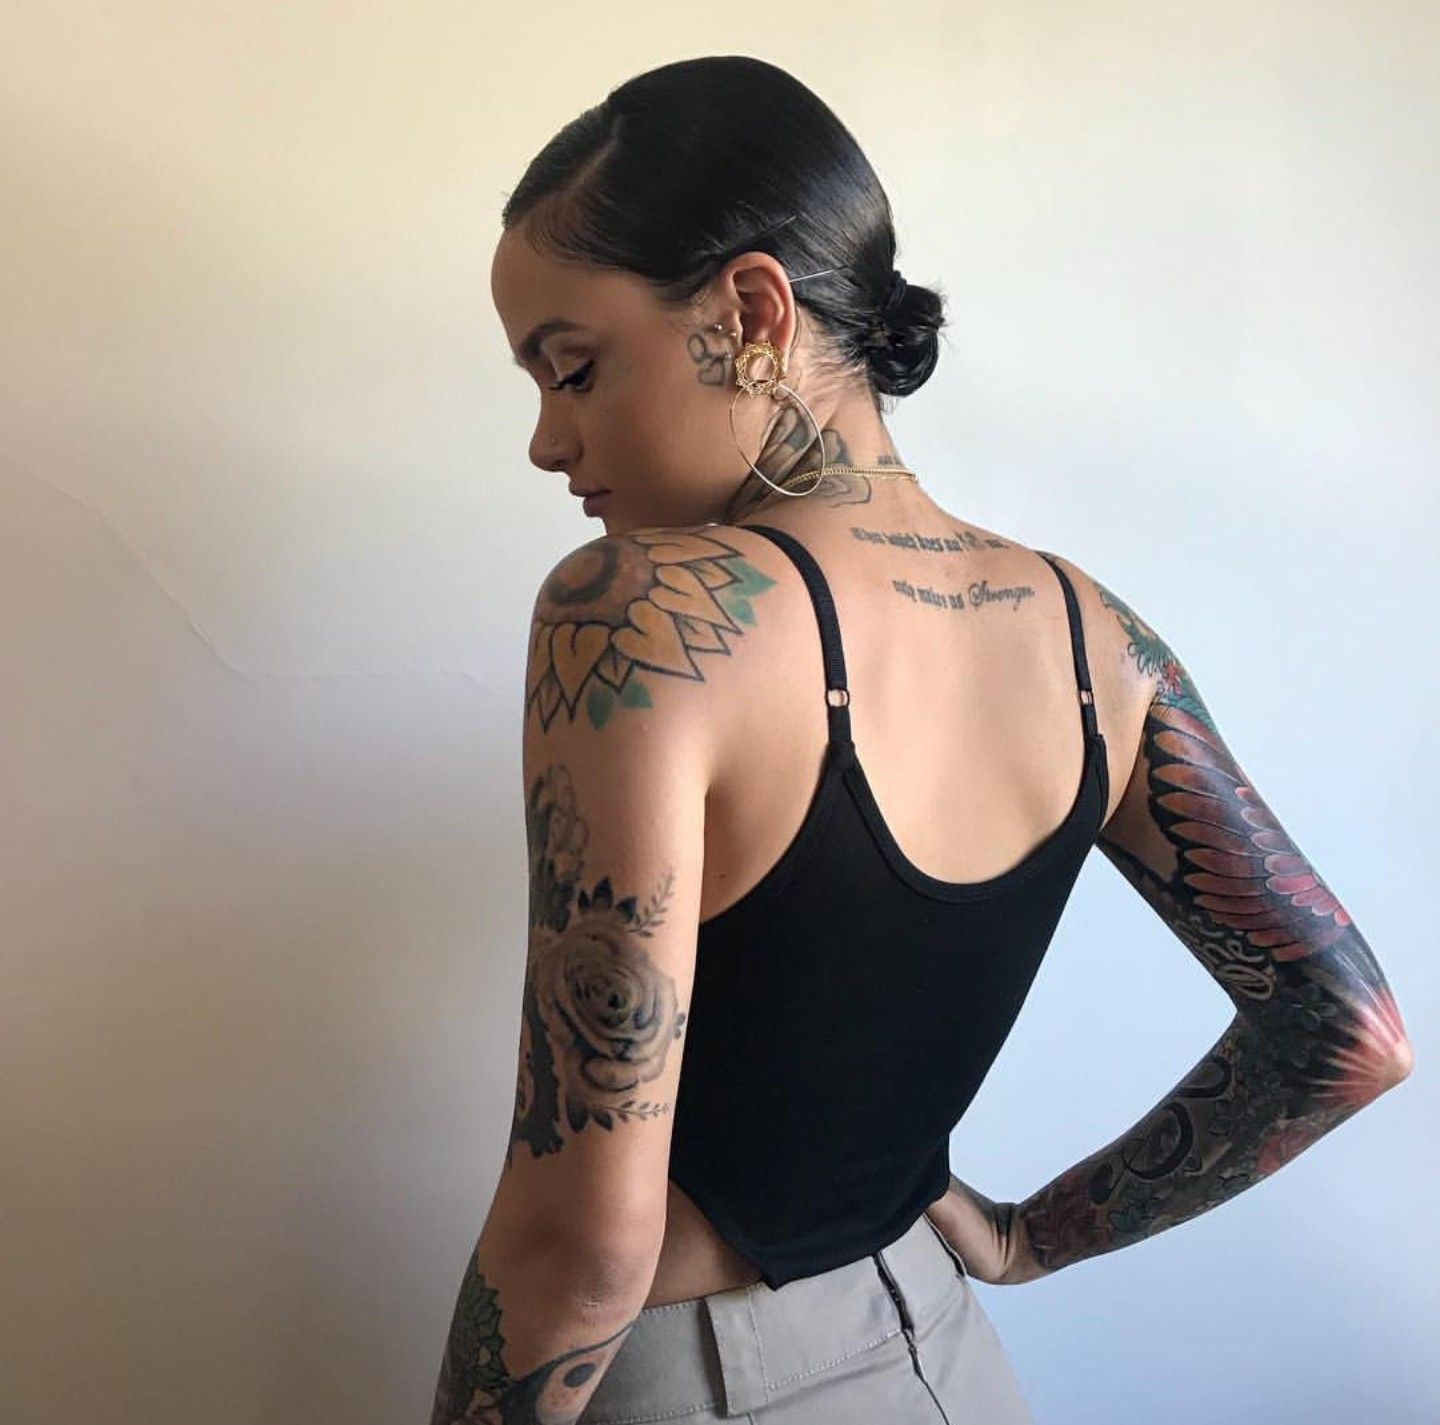 Kehlani October 2017 Kehlani Kehlani Tattoo Tattoos Body Art within size 14...